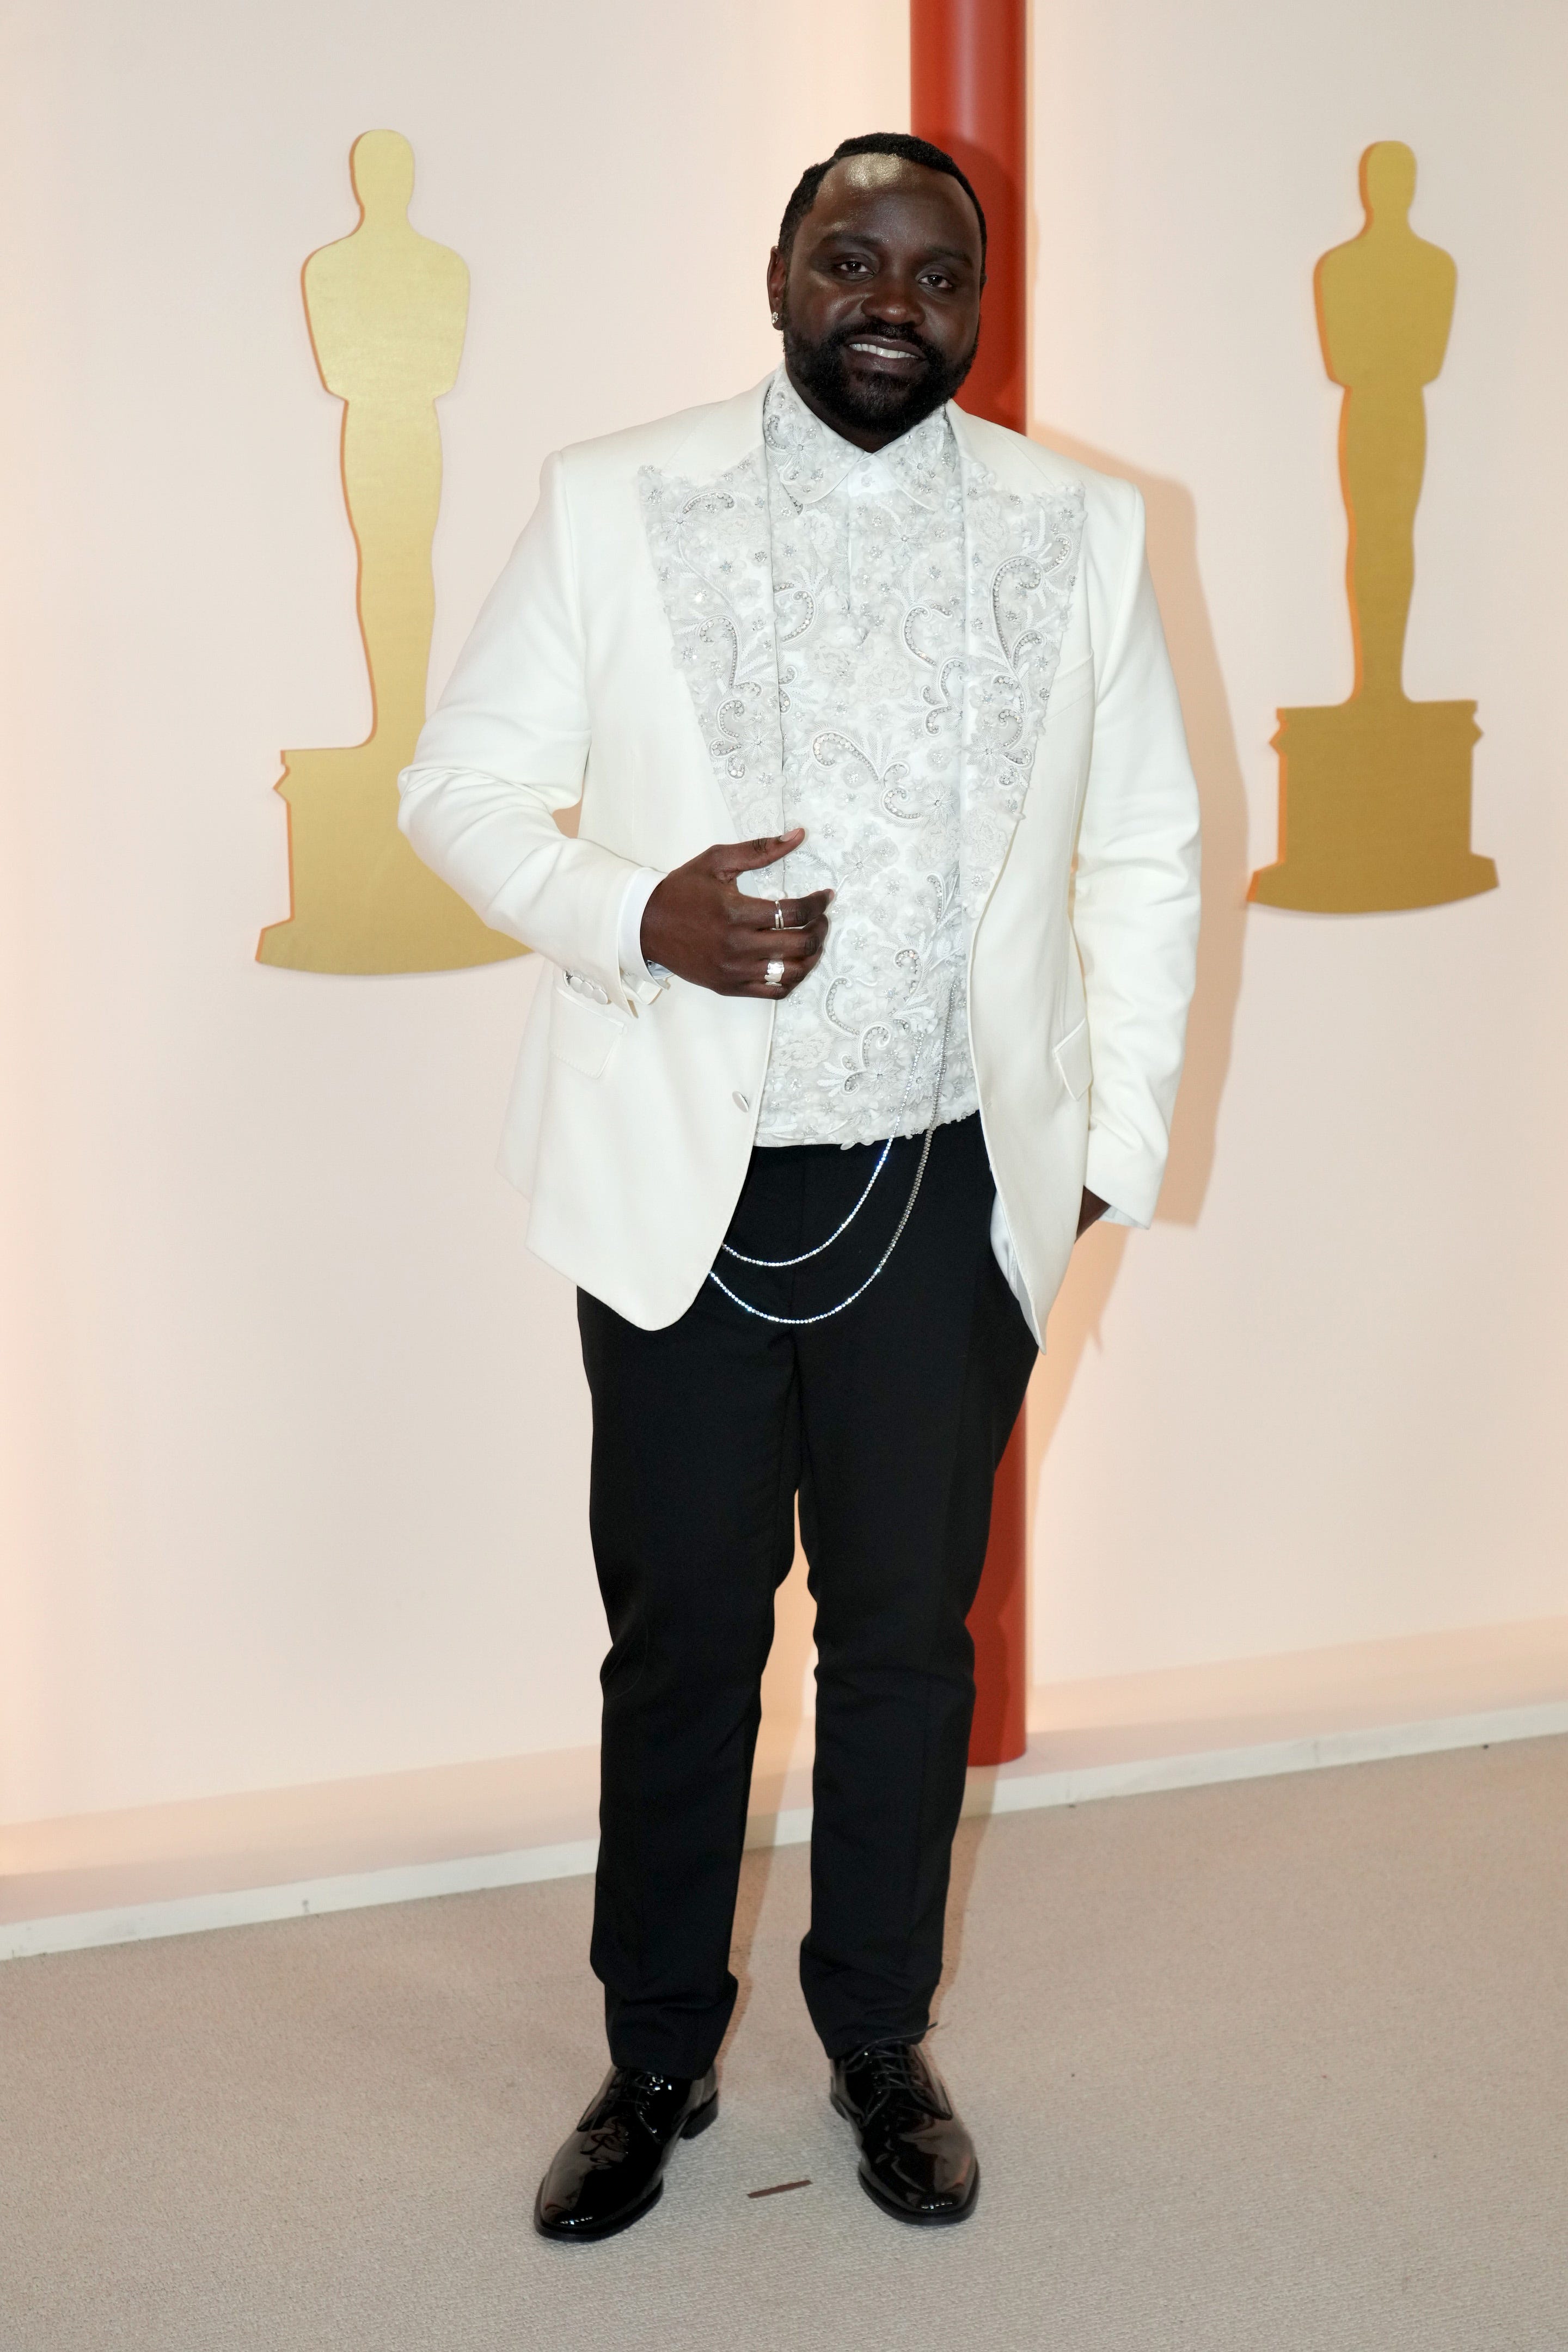 Brian Tyree Henry nimmt am 12. März 2023 an den 95. Annual Academy Awards teil